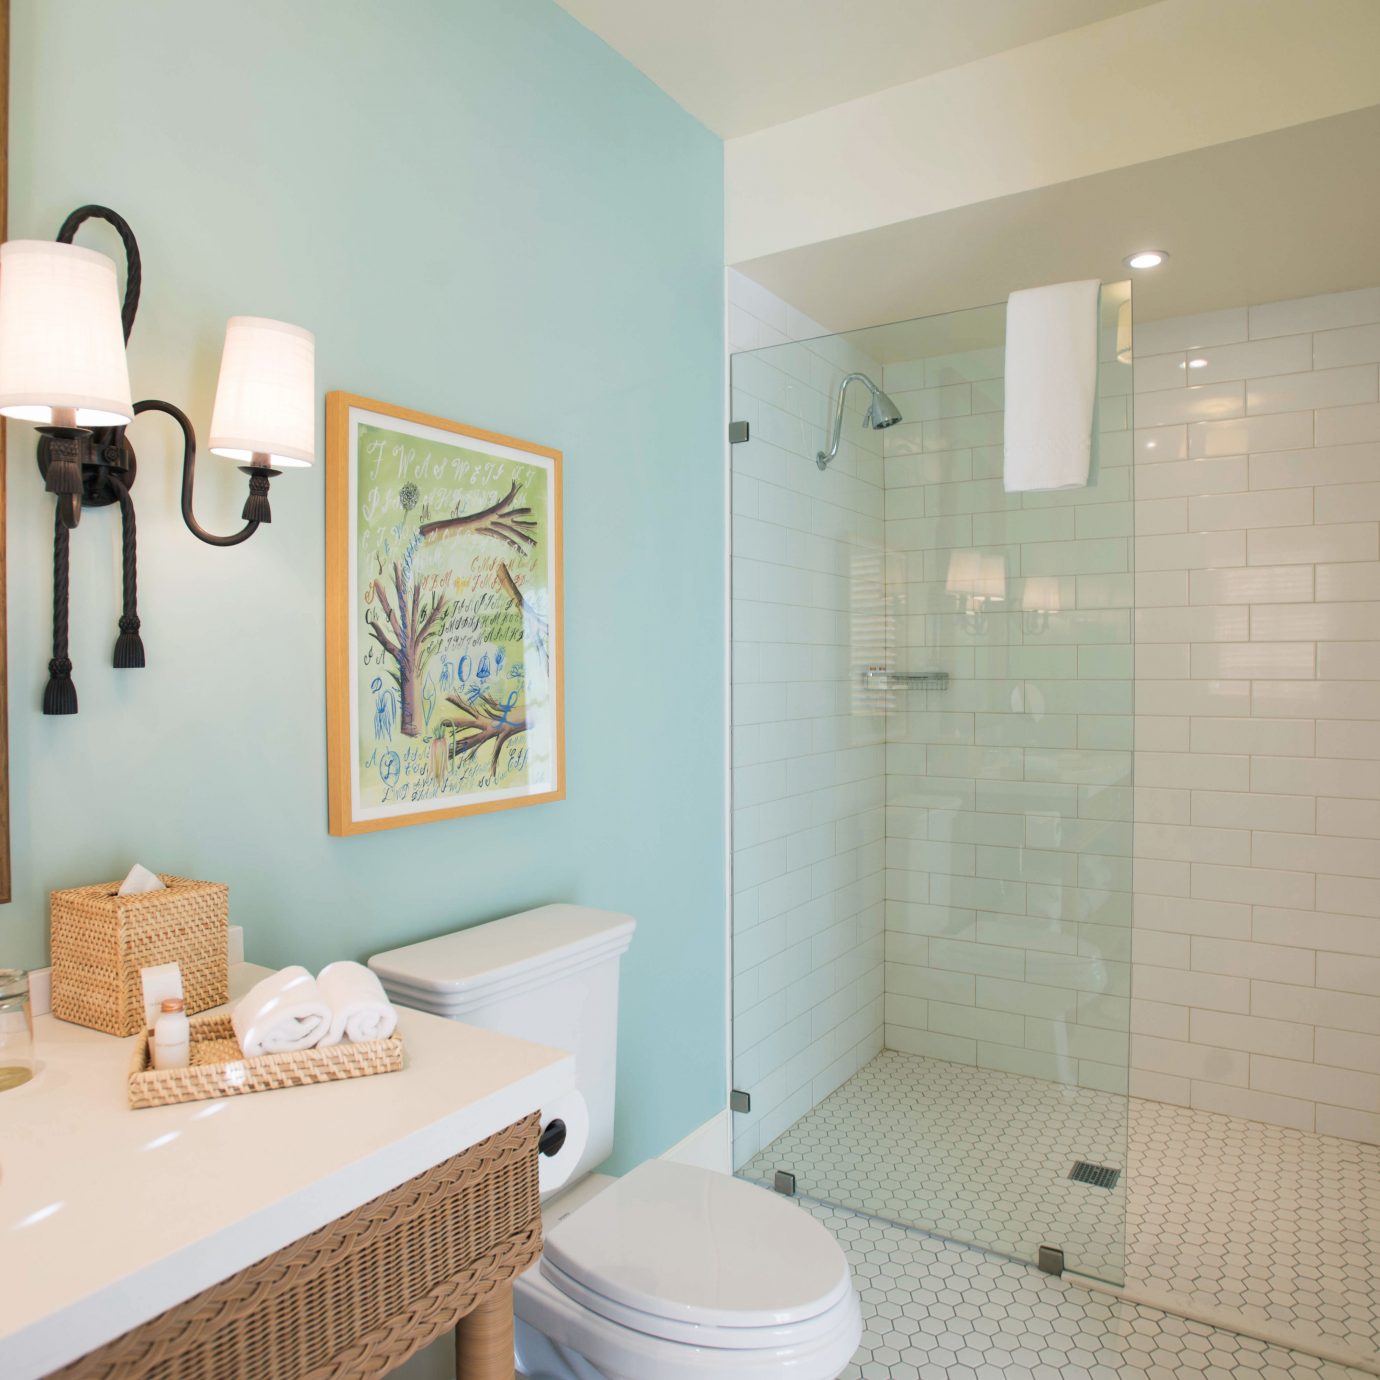 Bath Boutique Natural wonders Romance Wellness bathroom sink mirror property home toilet Suite plumbing fixture tub tile